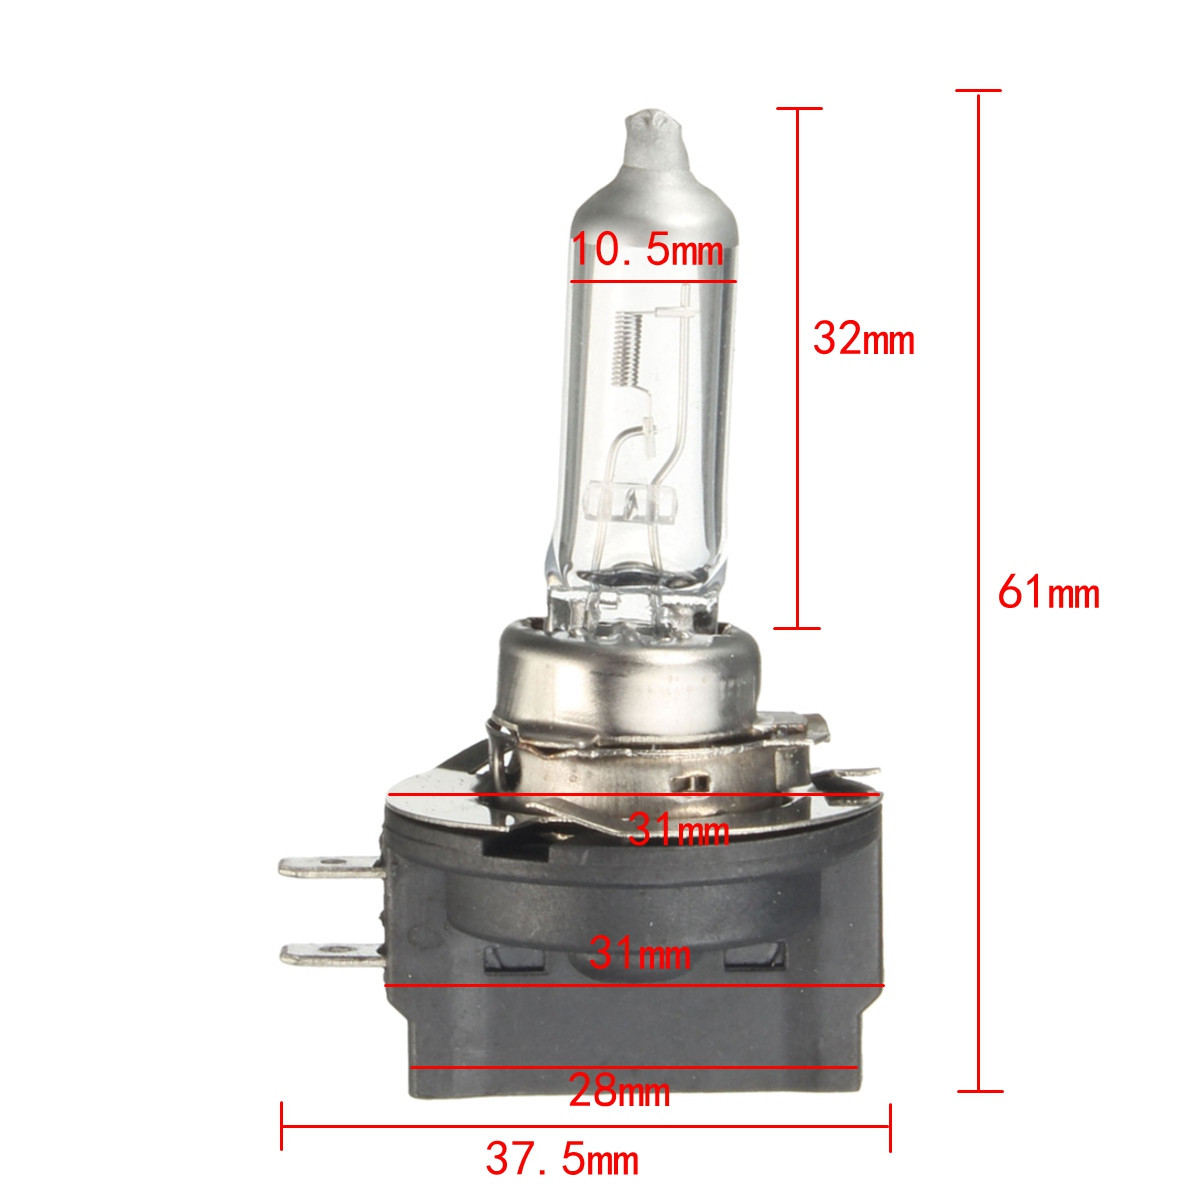 2-x-55W-12V-3000K-H11B-Halogen-Headlight-Light-Lamp-Clear-Bulbs-Replacement-1057350